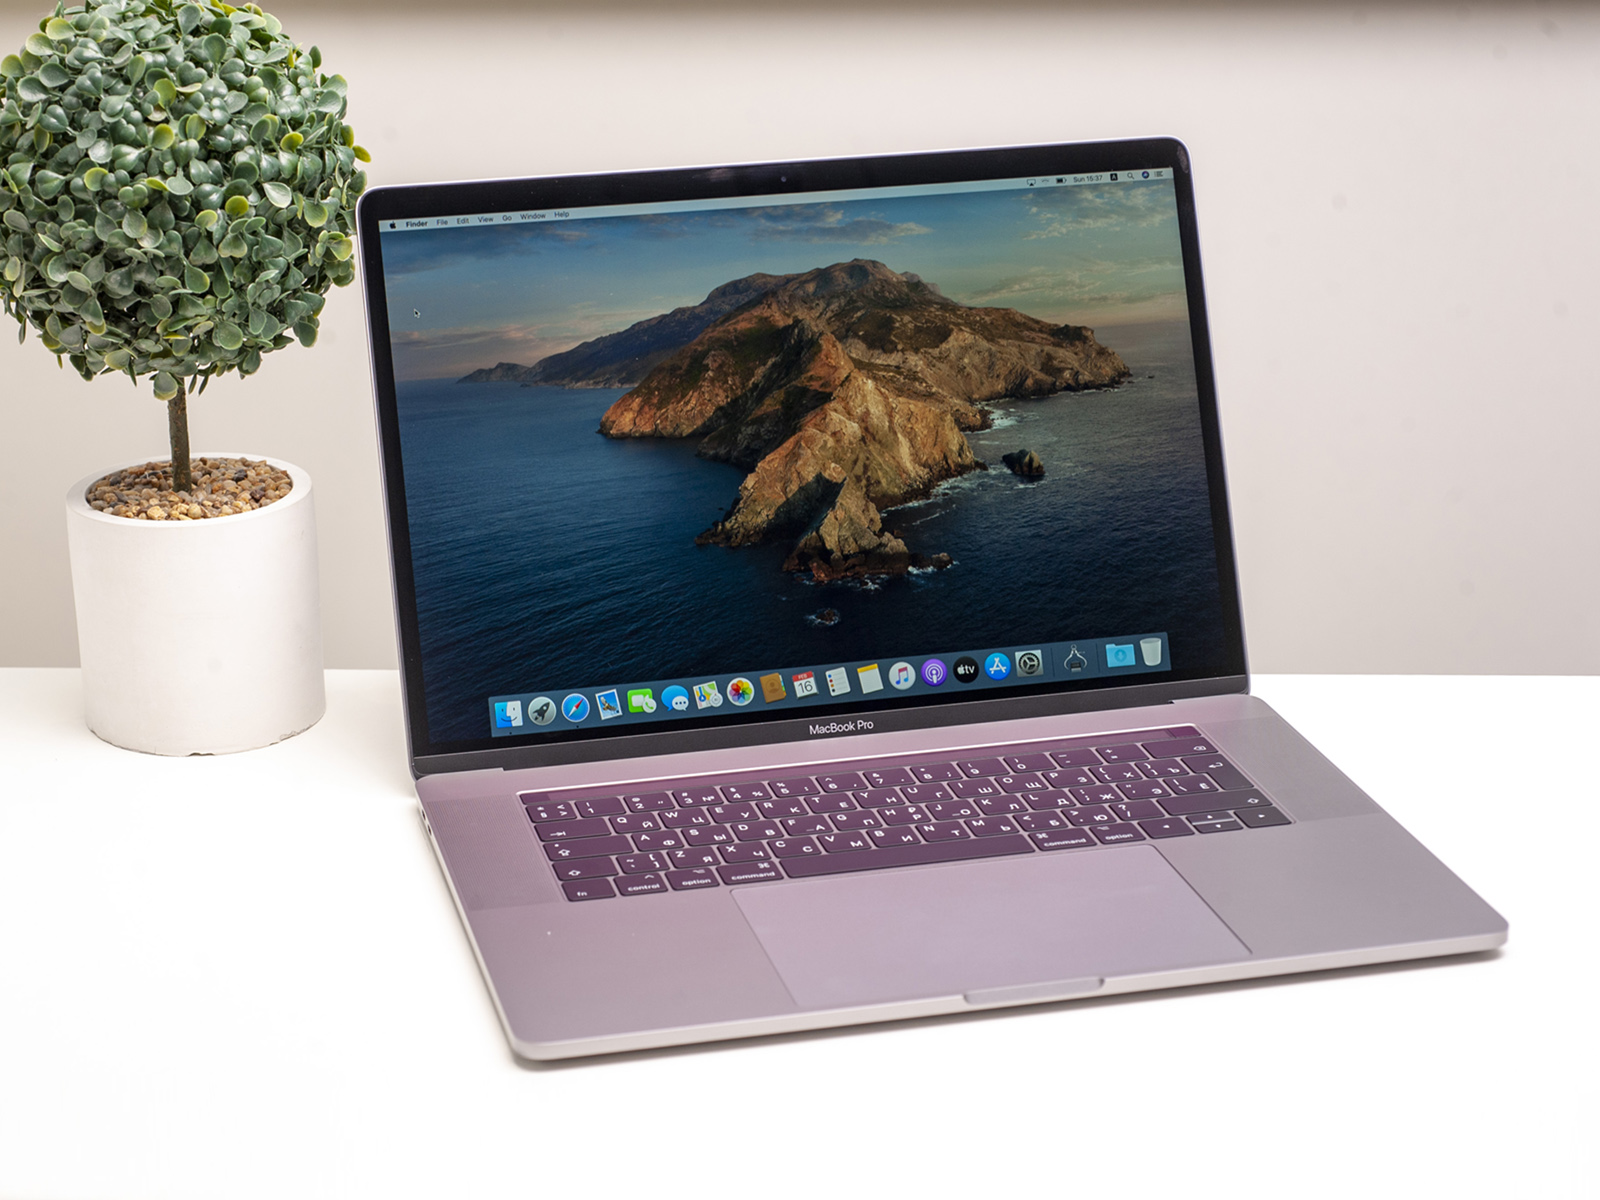 Apple MacBook Pro 15 Space Gray 2016 (MLH32) б/у